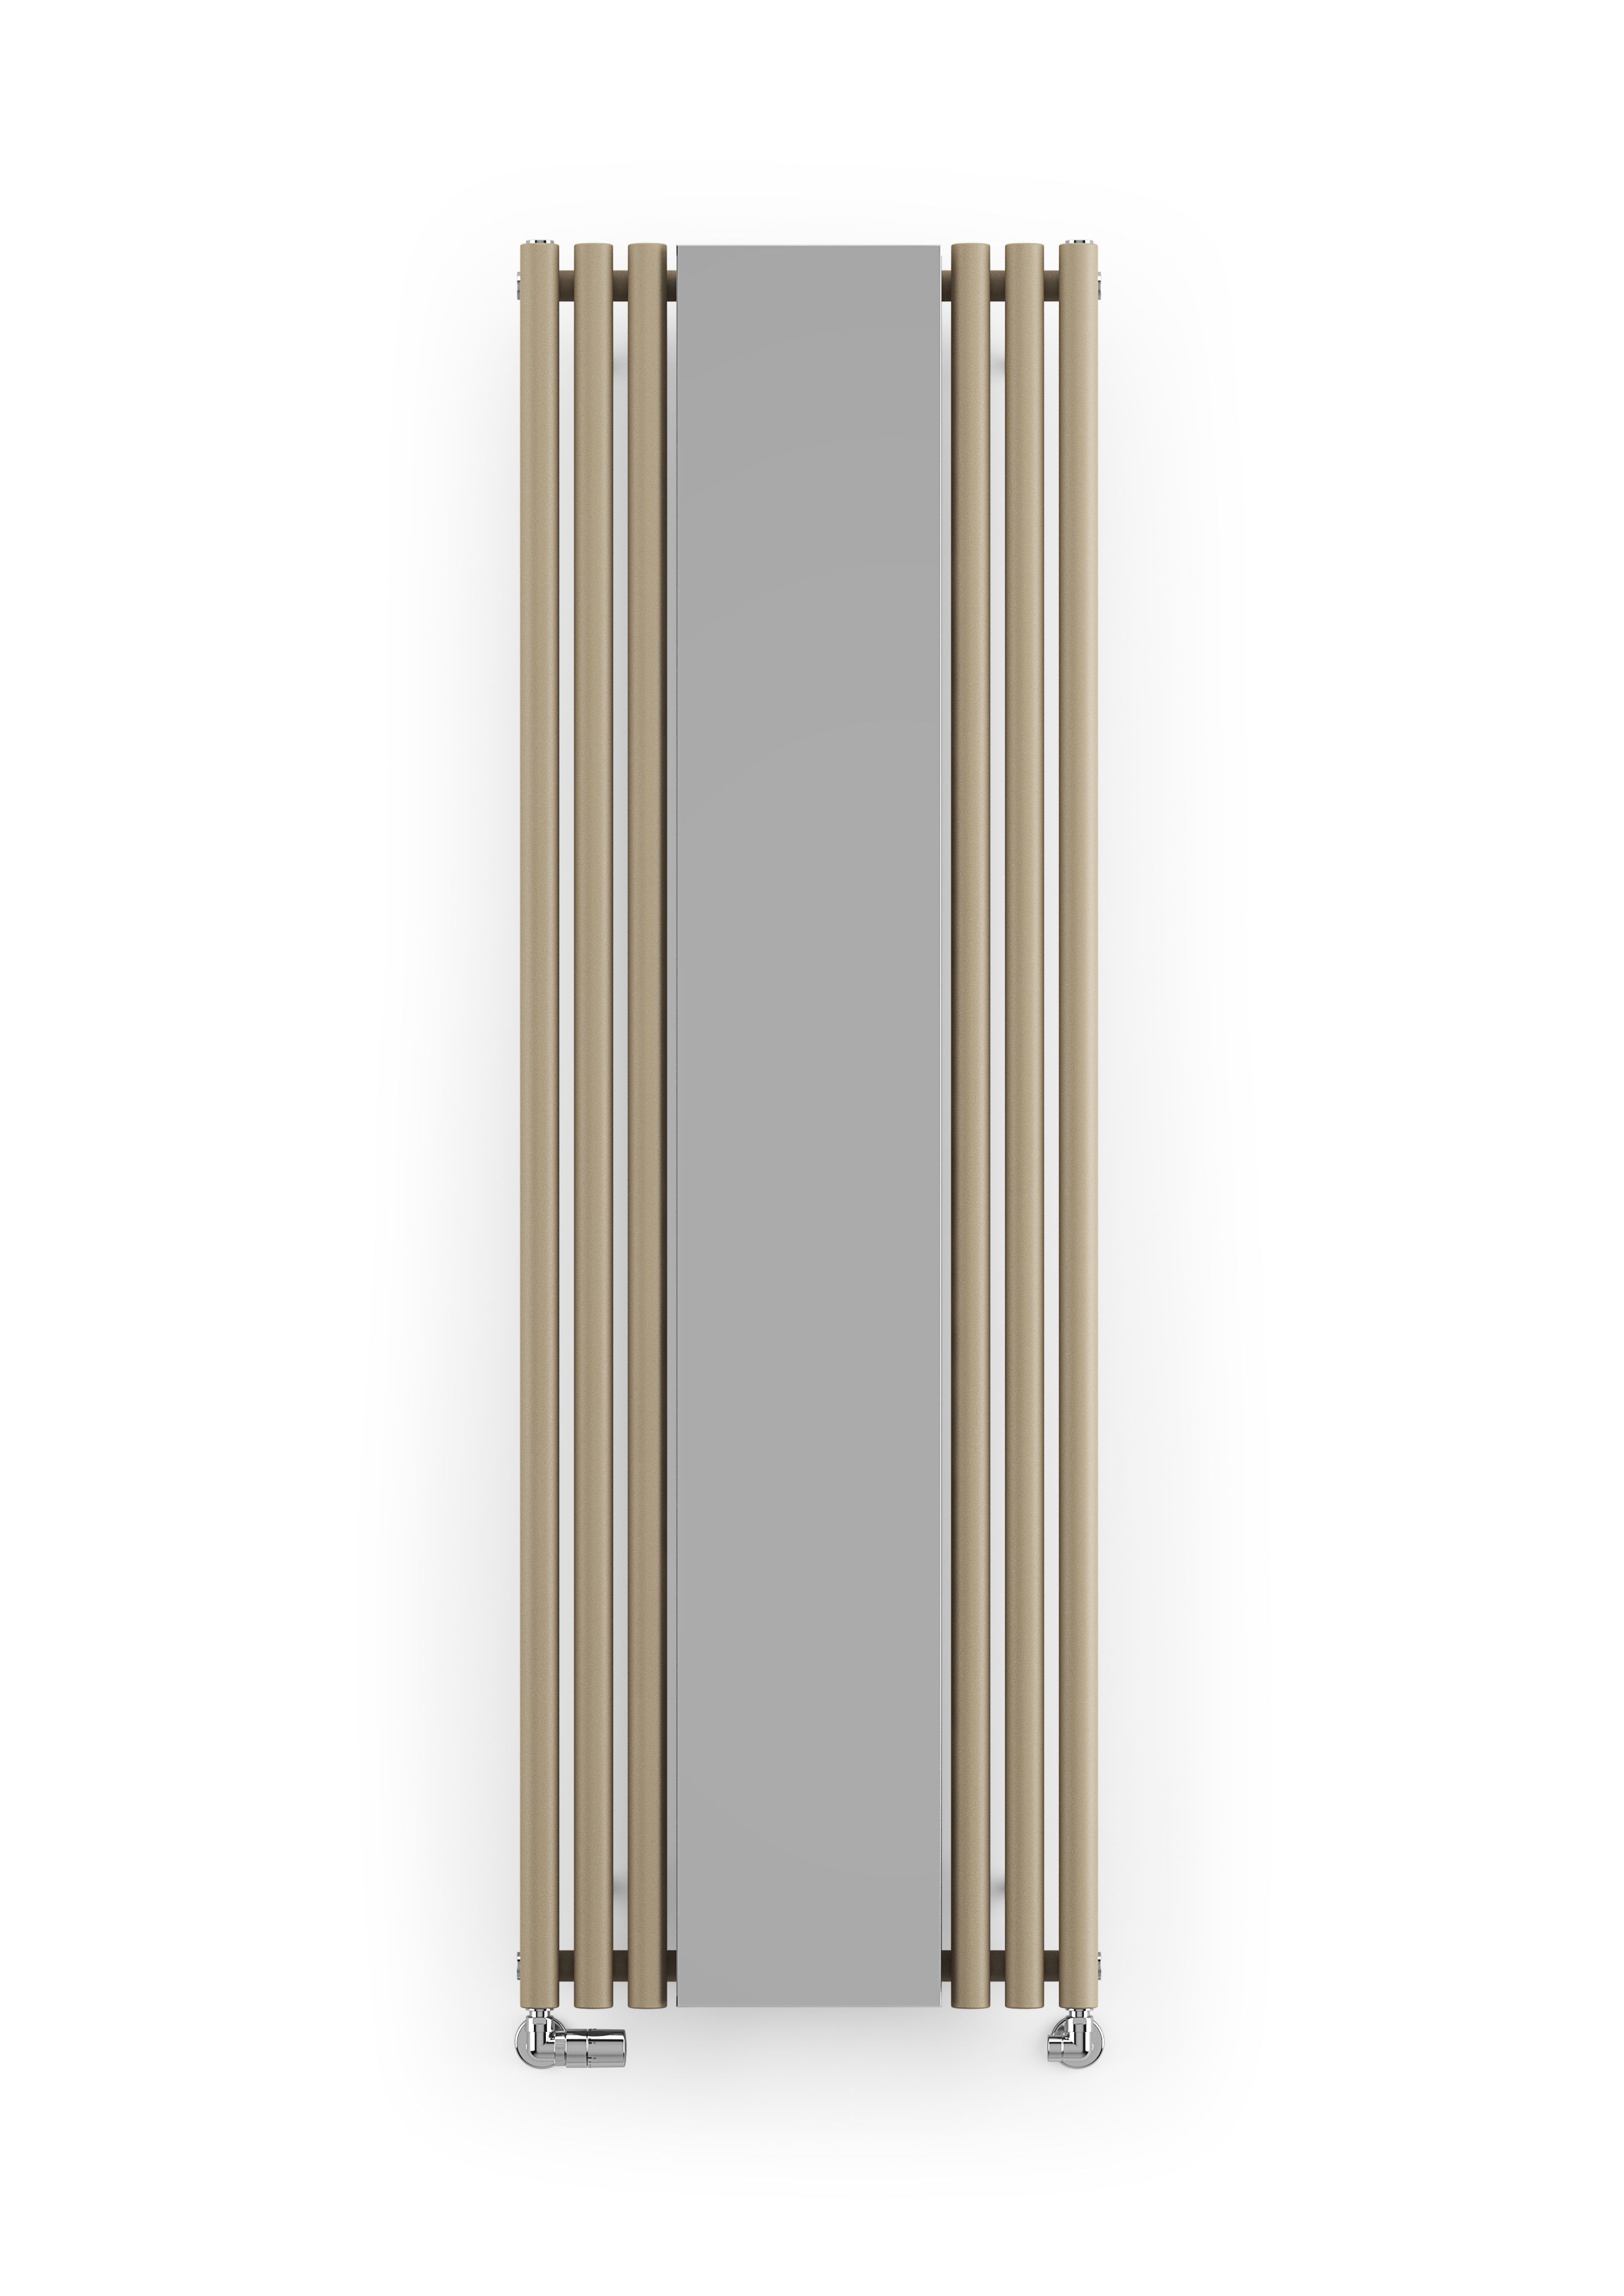 Terma Rolo Mirror Quartz mocha Vertical Designer Radiator, (W)590mm x (H)1800mm